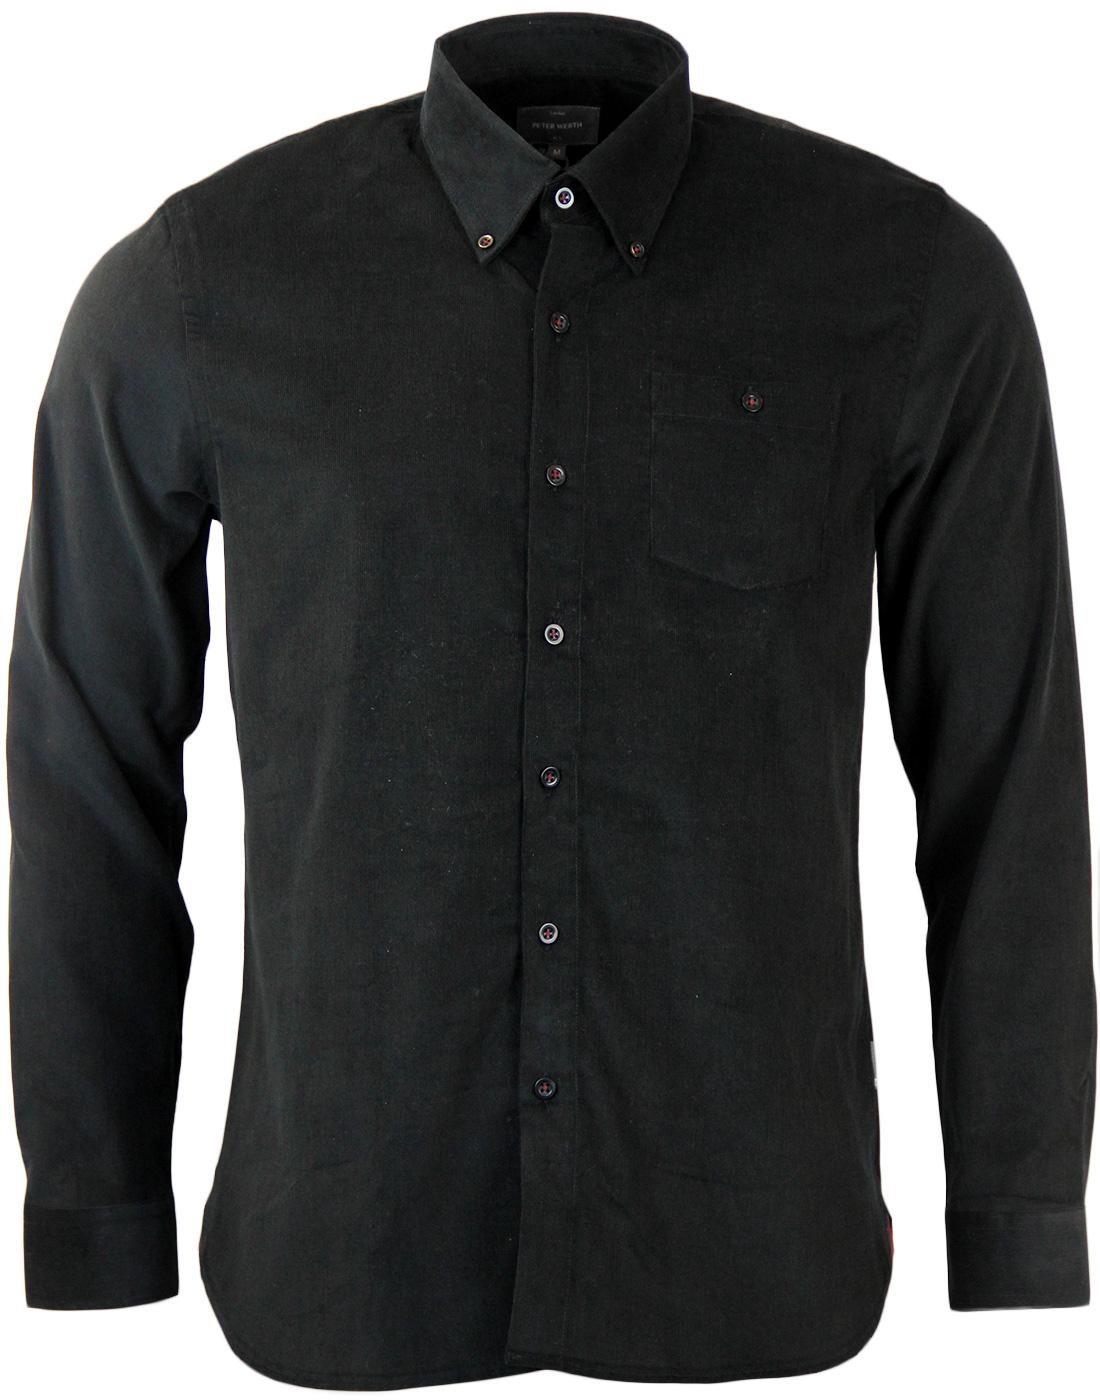 PETER WERTH Toil Retro Mod Fine Cord Shirt in Black